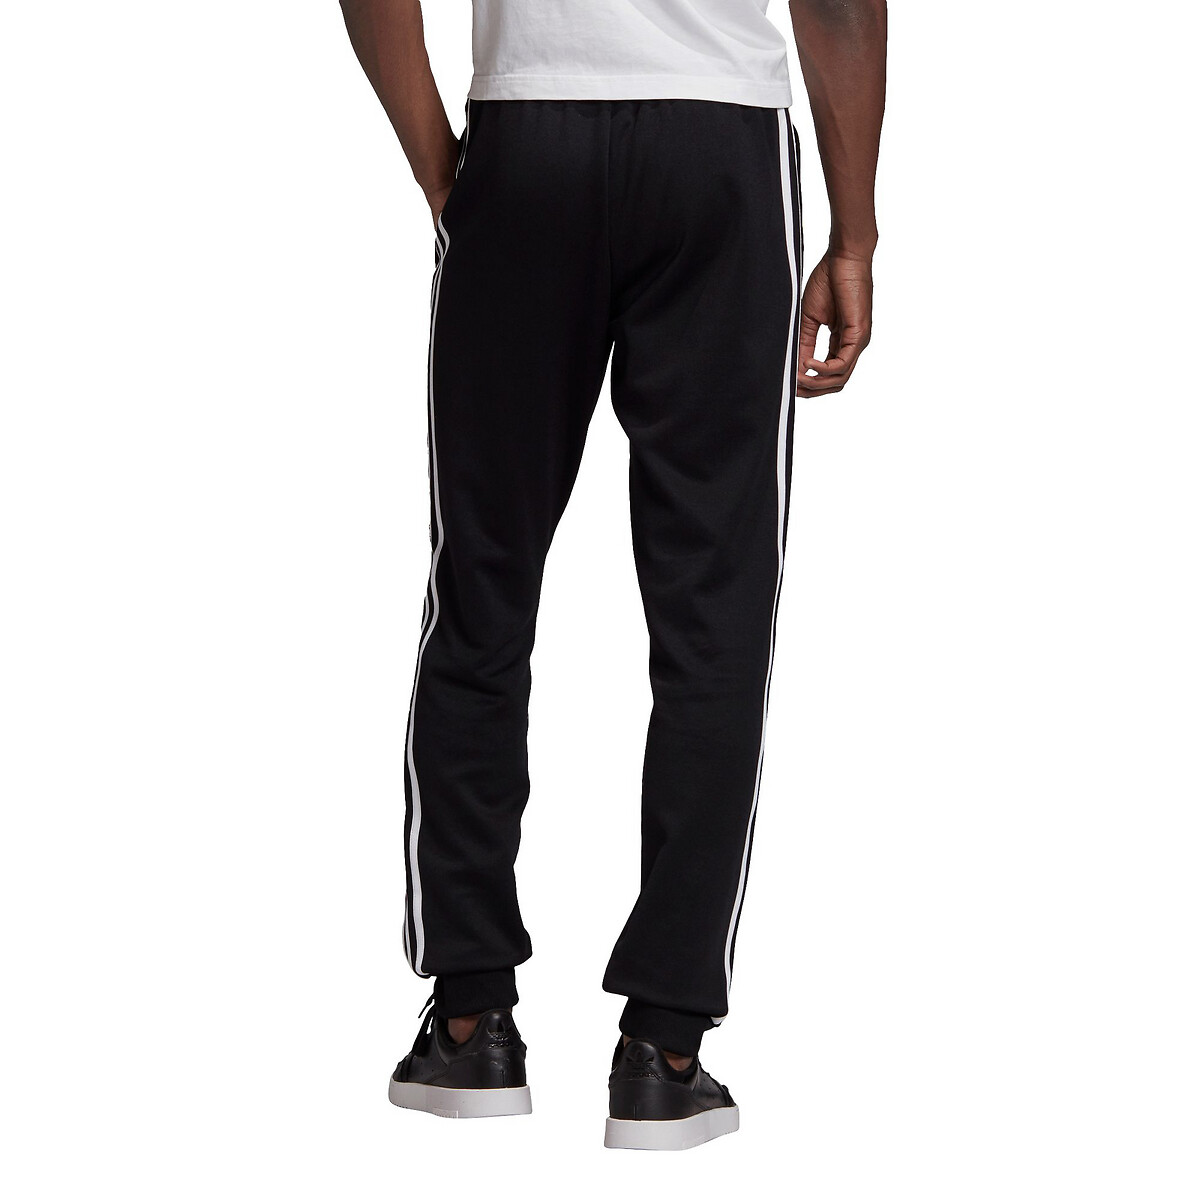 Adidas Pantalon de sport noir-blanc style d\u00e9contract\u00e9 Mode Pantalons Pantalons de sport 